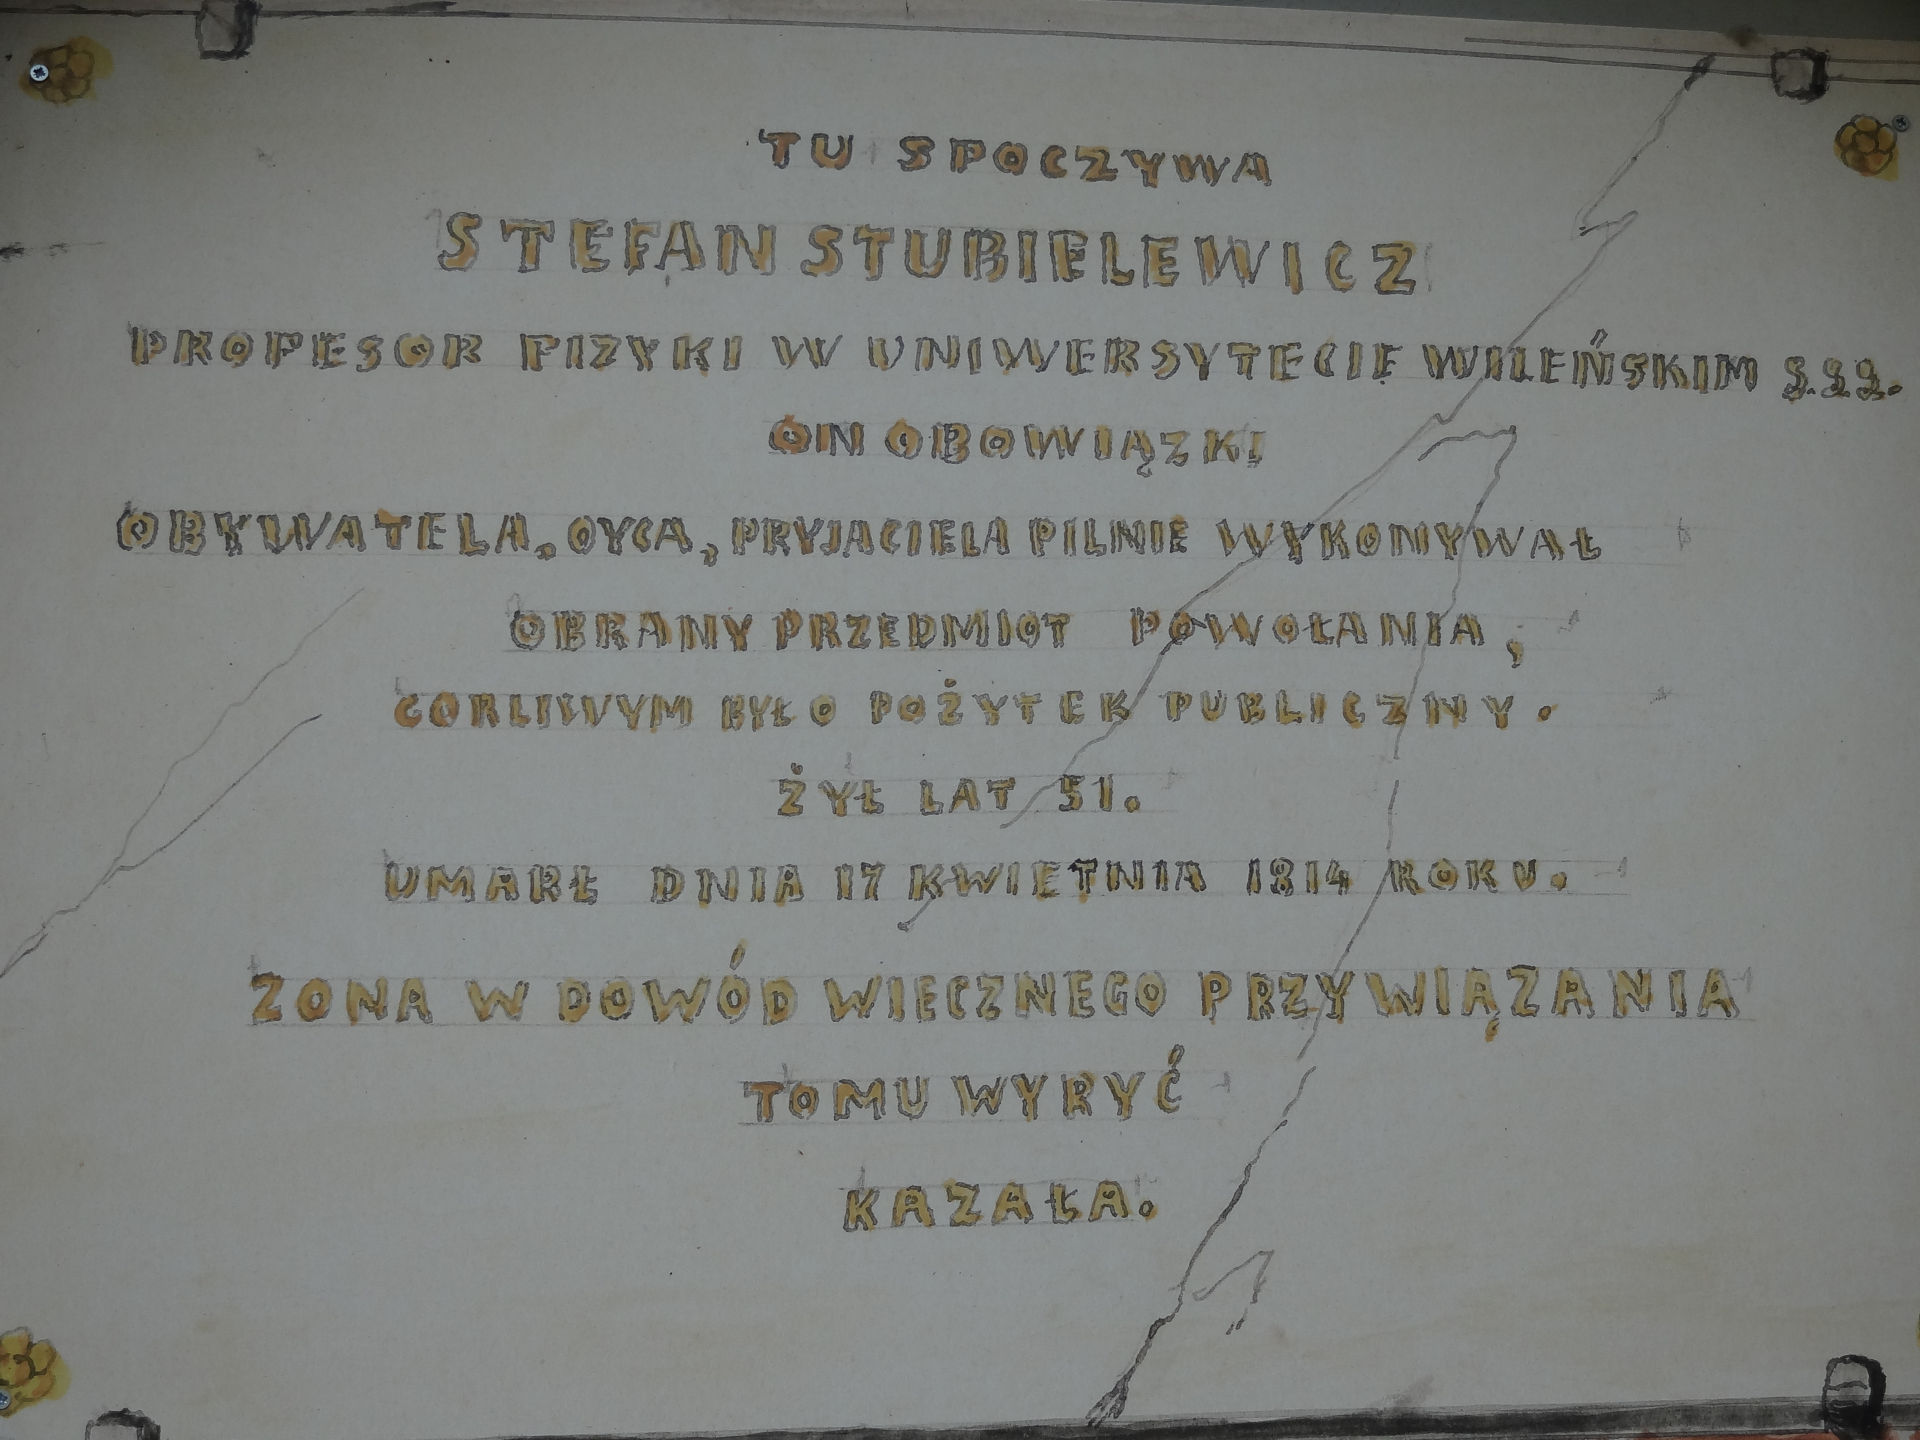 Stubielewicz's headstone (liquidated about 2014) at the Bernardinian Cemetery